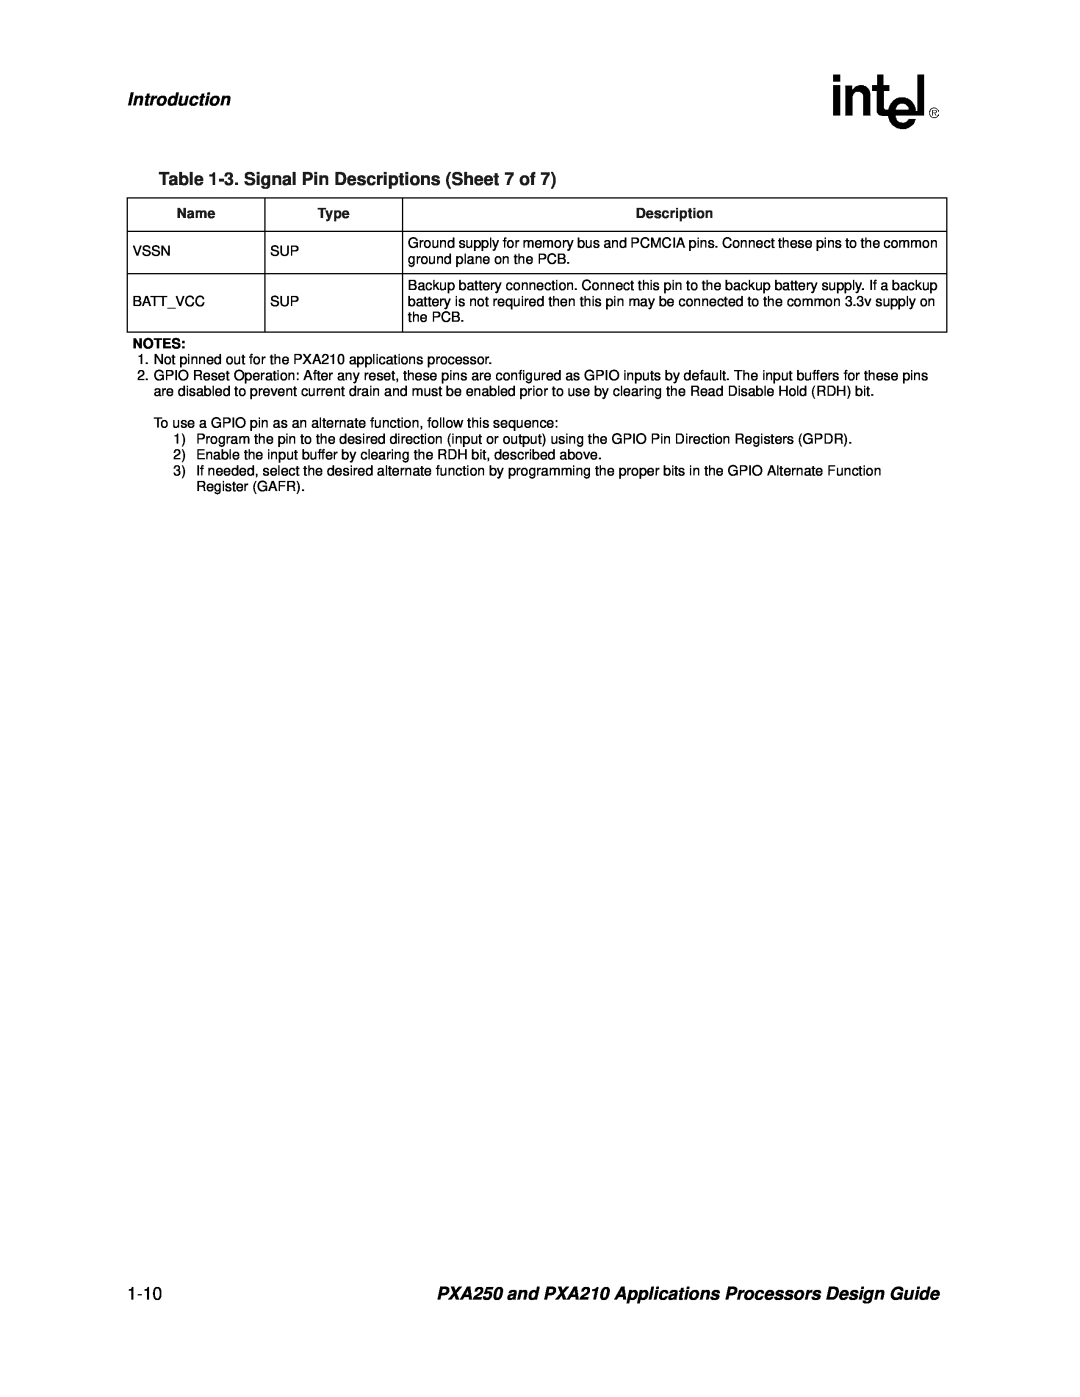 Intel PXA250 and PXA210 manual Introduction, 3. Signal Pin Descriptions Sheet 7 of 